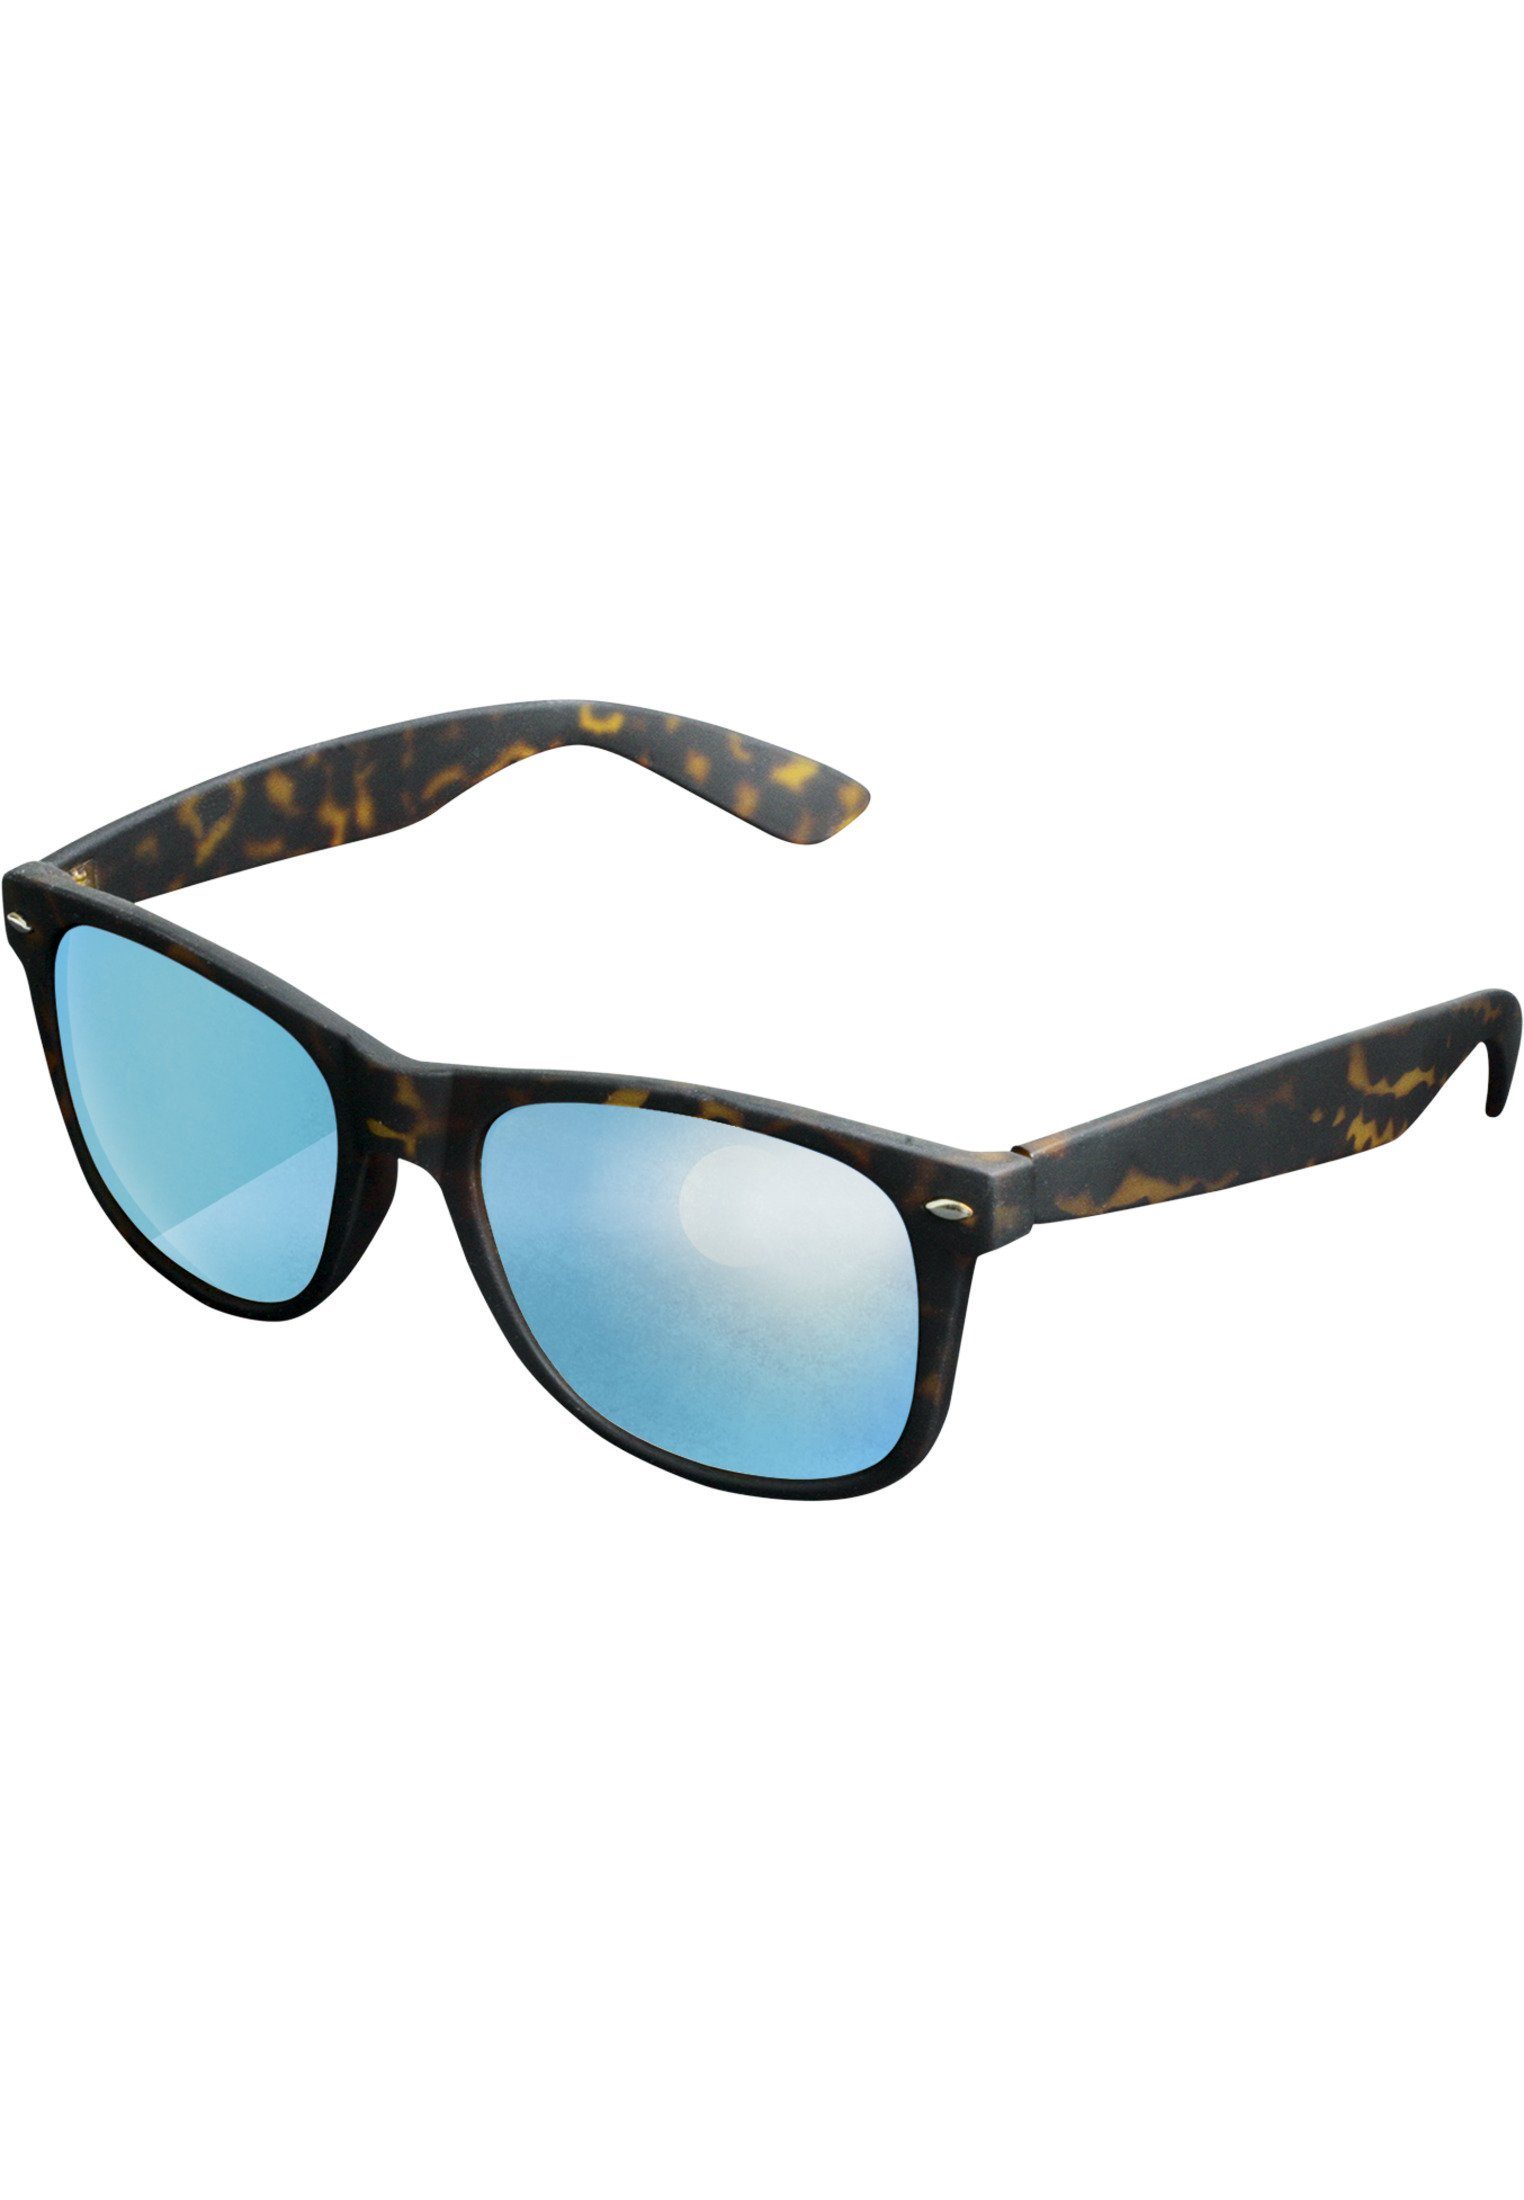 Mirror Sunglasses amber/blue MSTRDS Likoma Sonnenbrille Accessoires